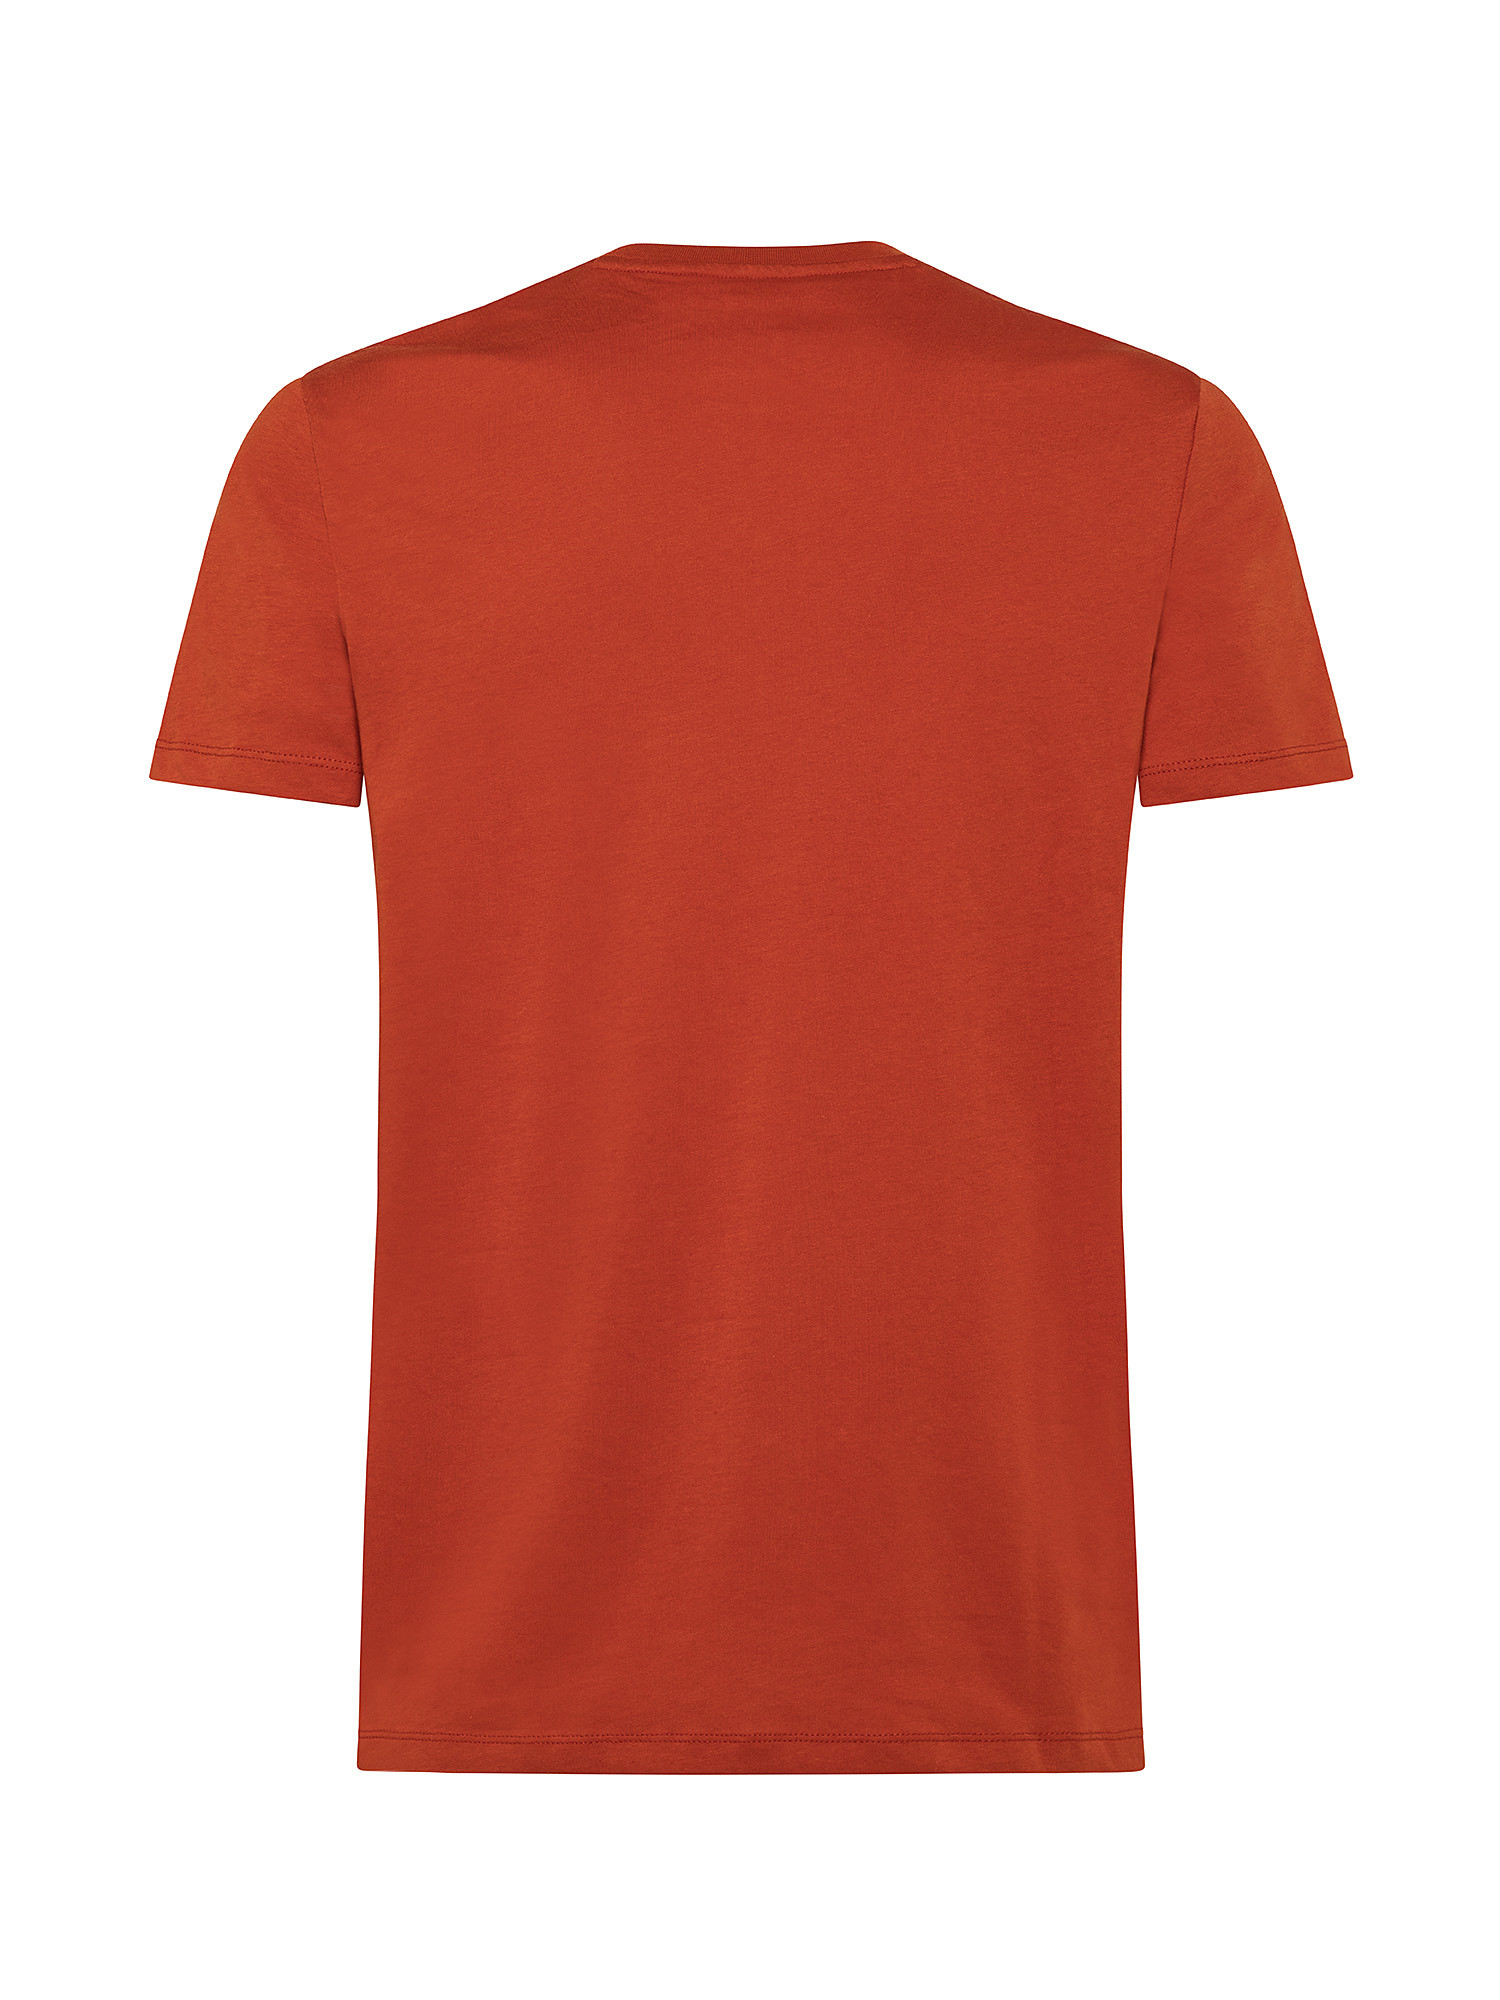 T-shirt, Orange, large image number 1